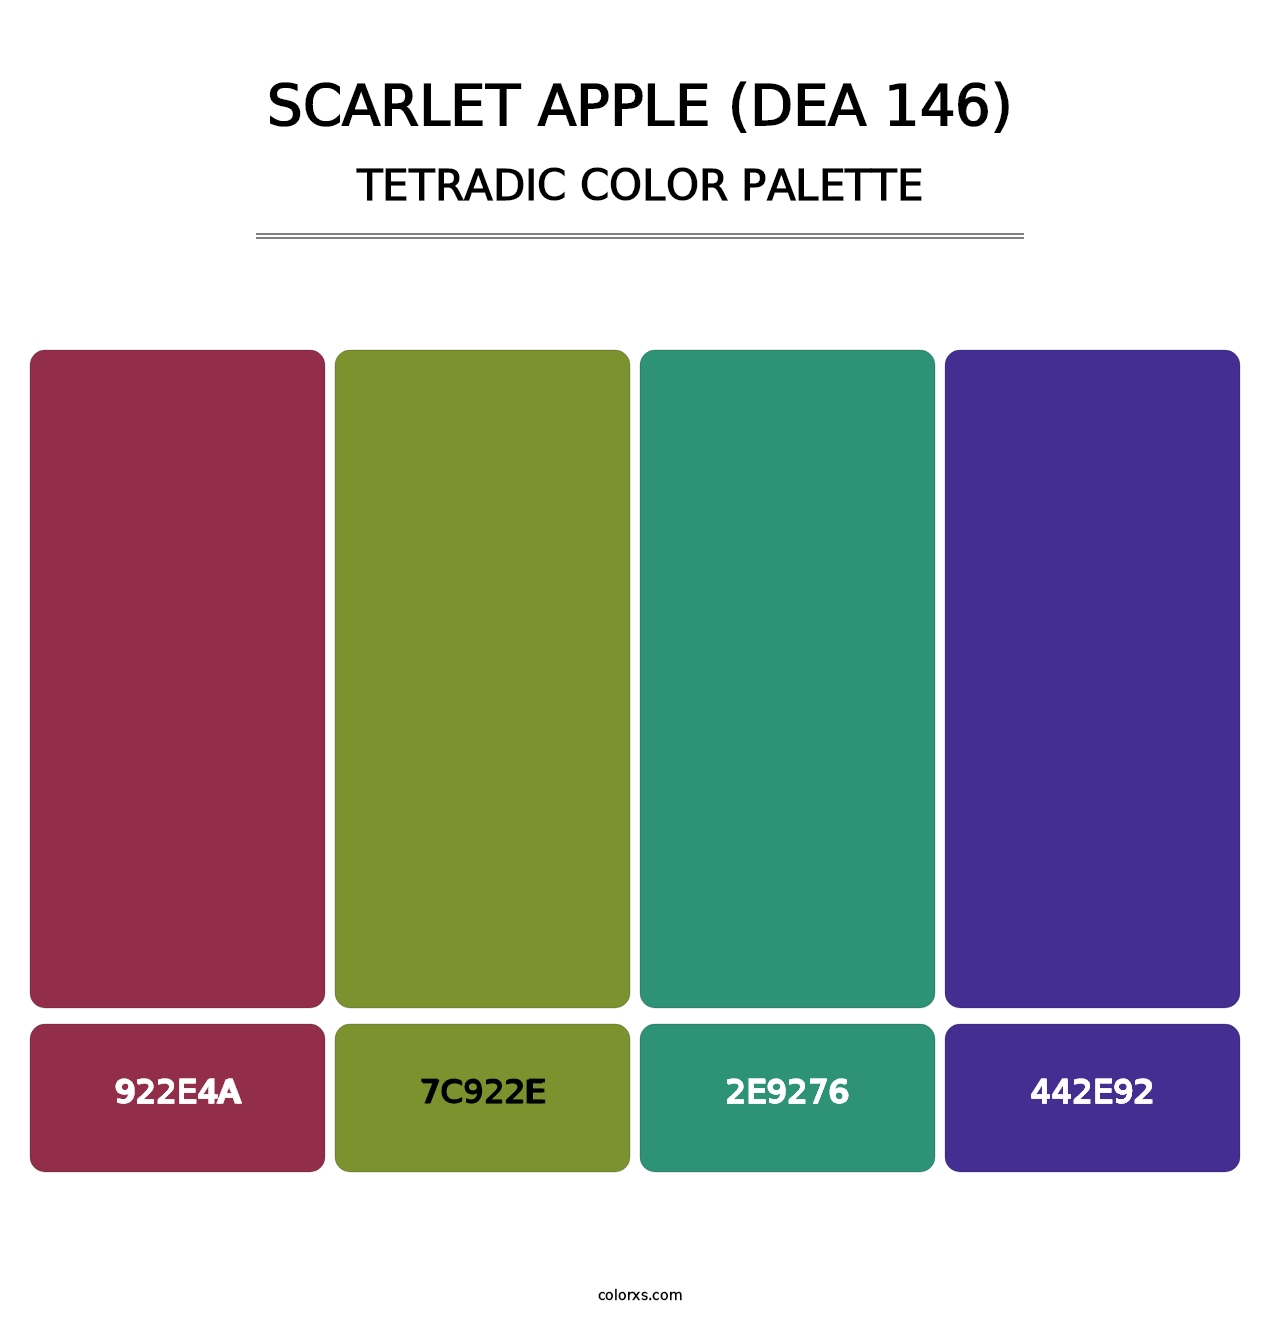 Scarlet Apple (DEA 146) - Tetradic Color Palette